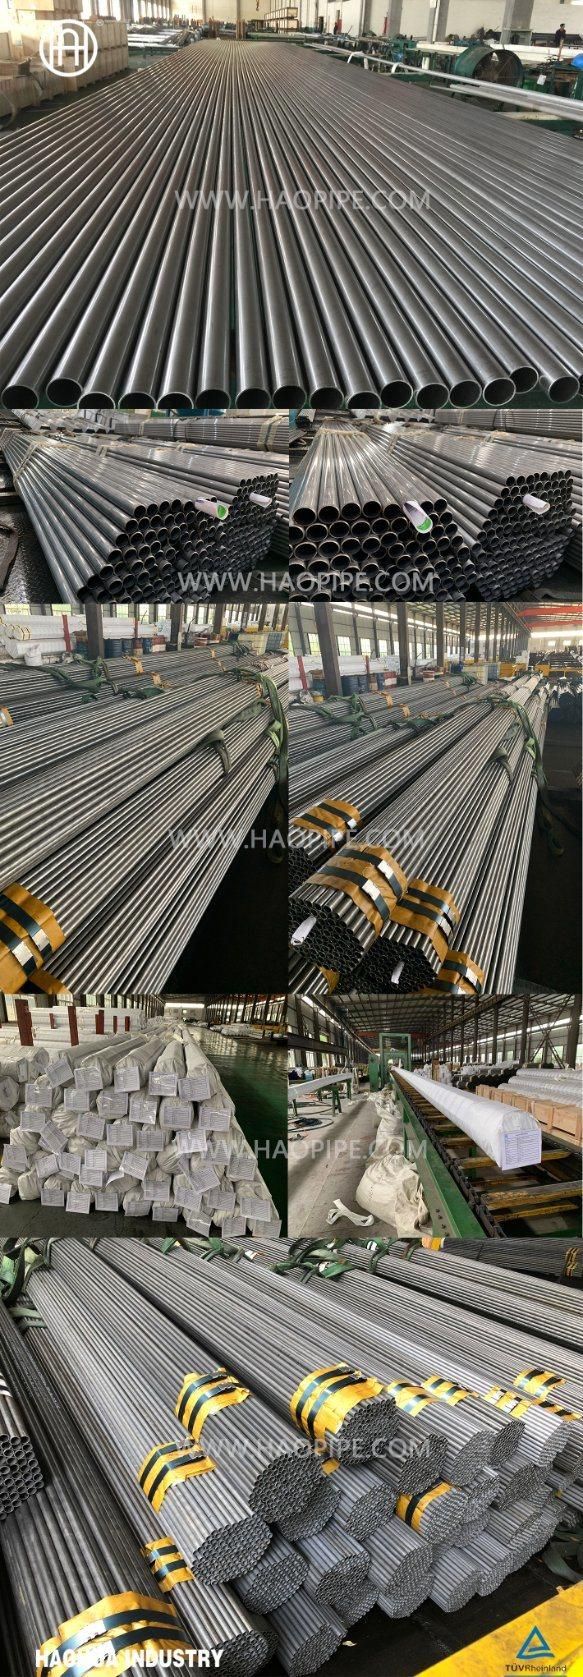 En10216-2 13crmo4-5 Seamless Steel Pipe/Tube Nace Mr0175/ISO 15156